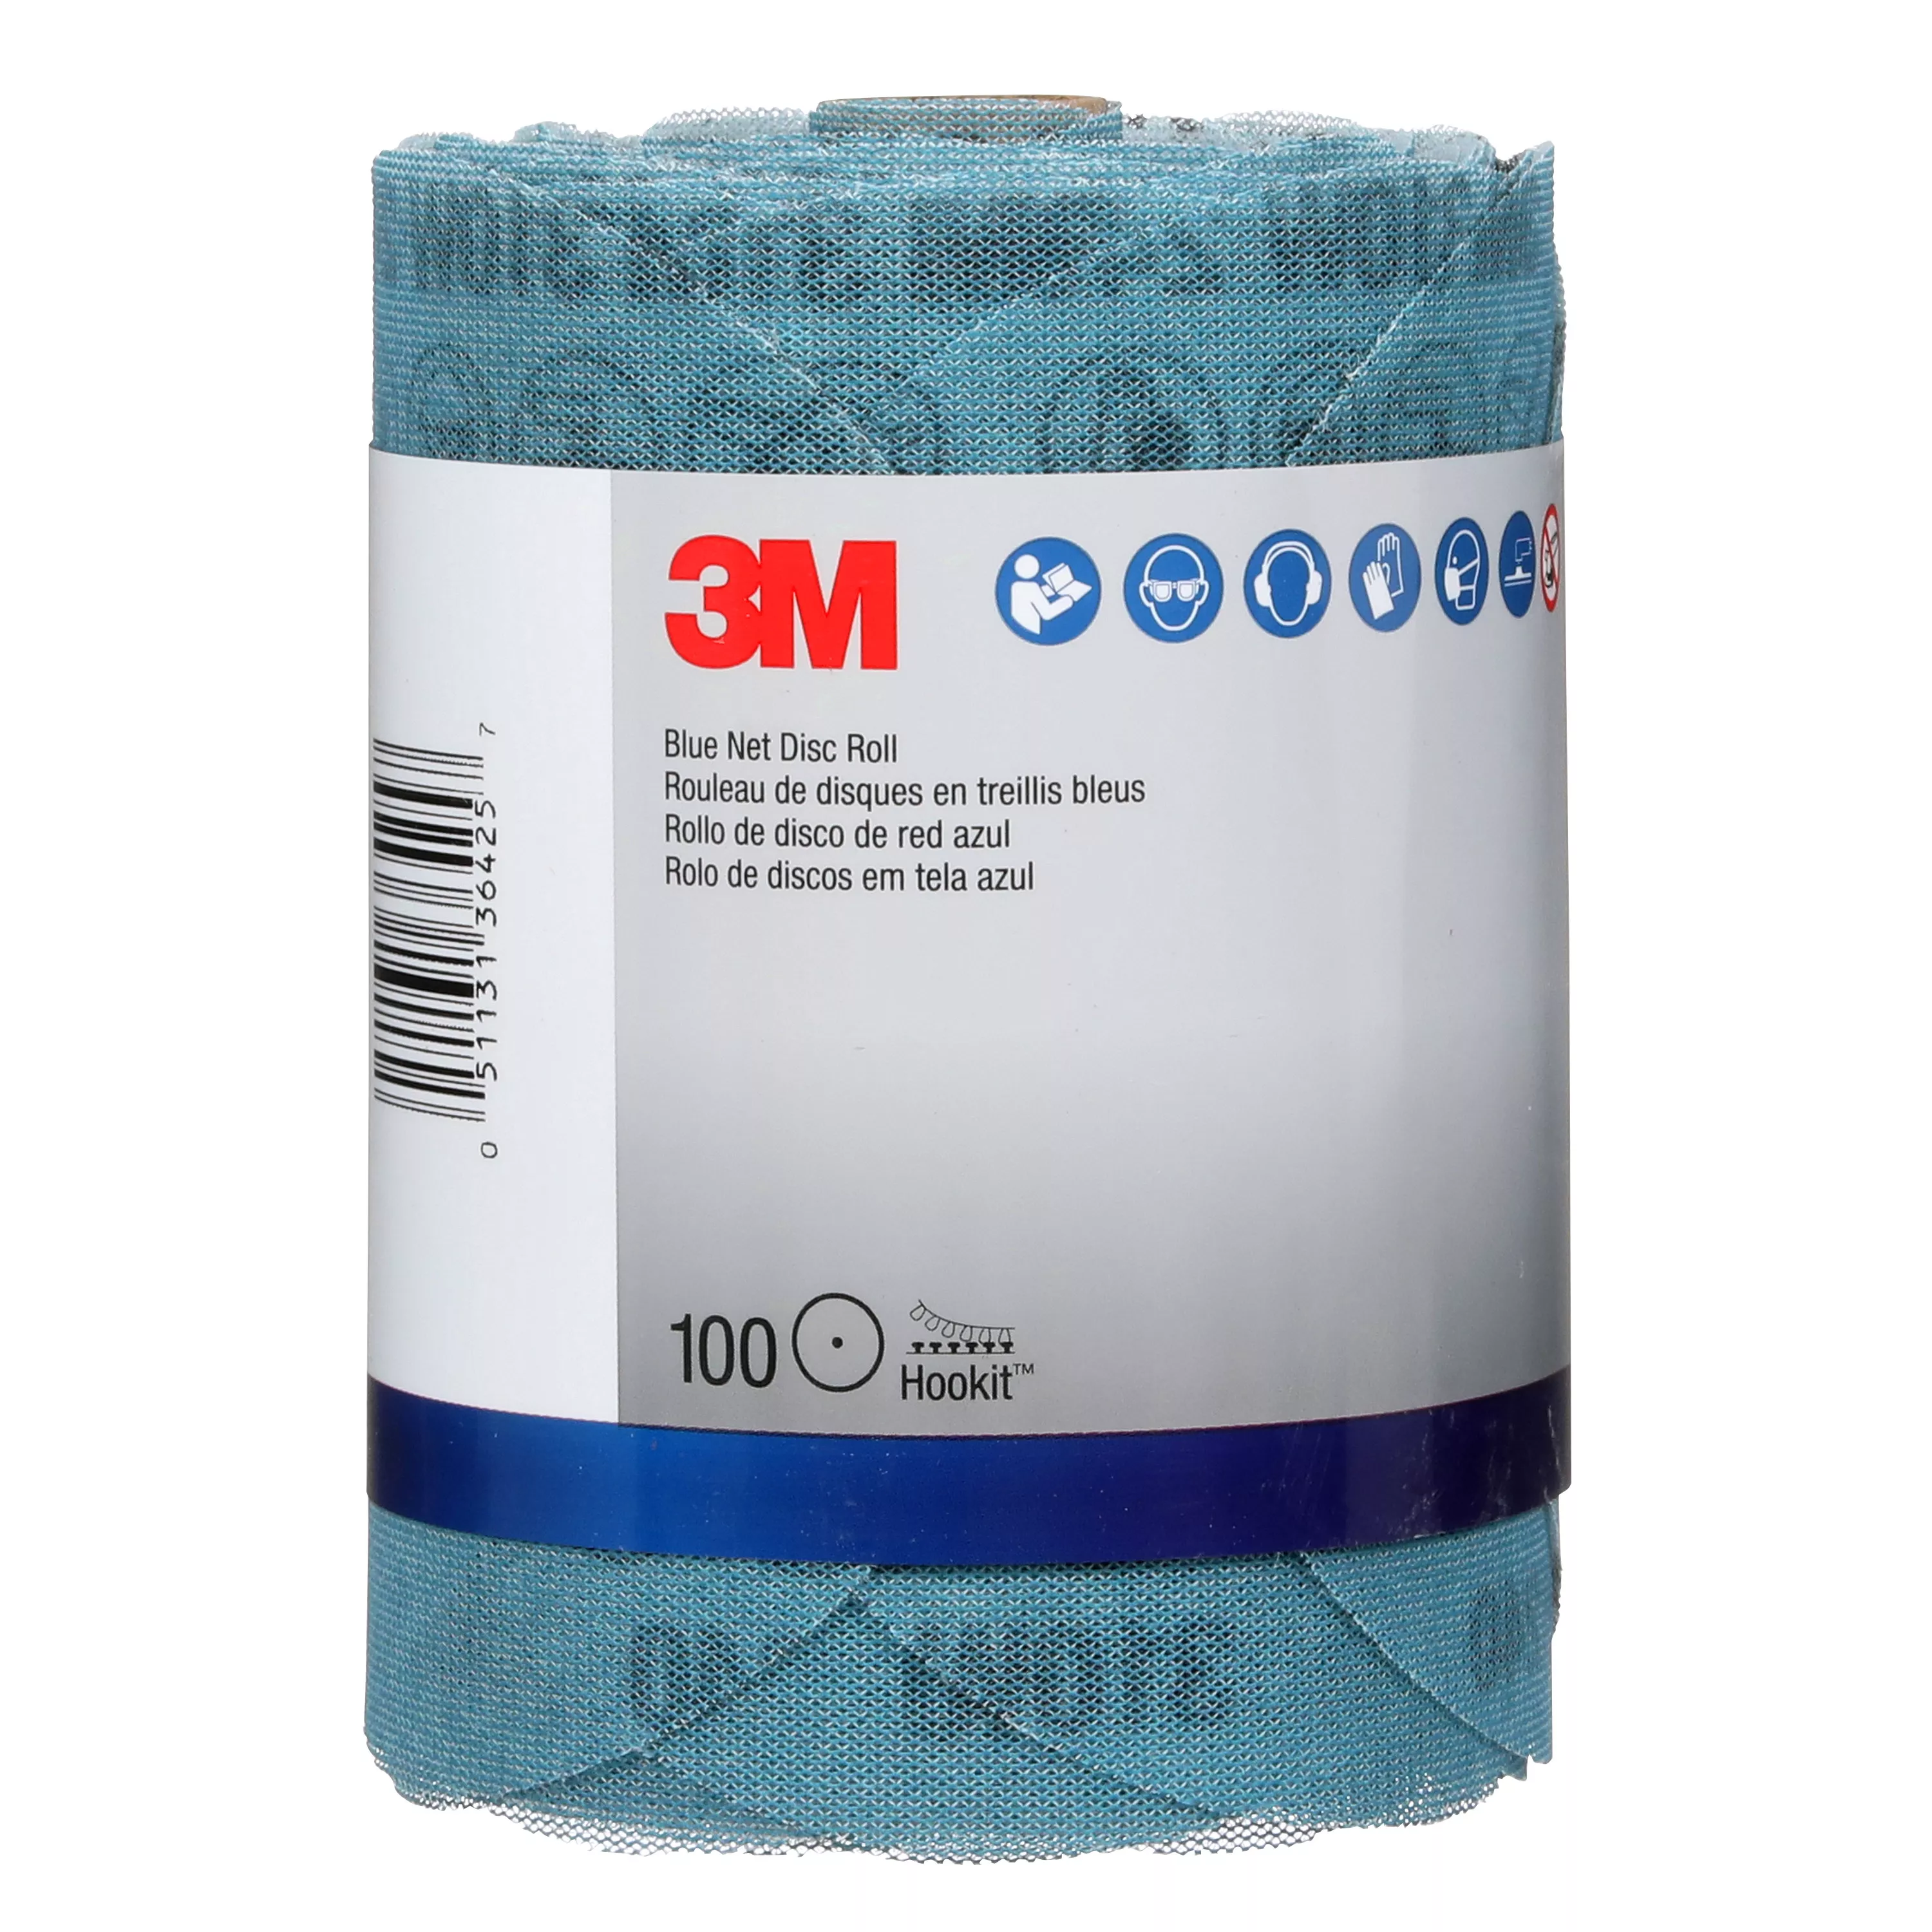 SKU 7100254377 | 3M™ Blue Net Disc Roll 36425